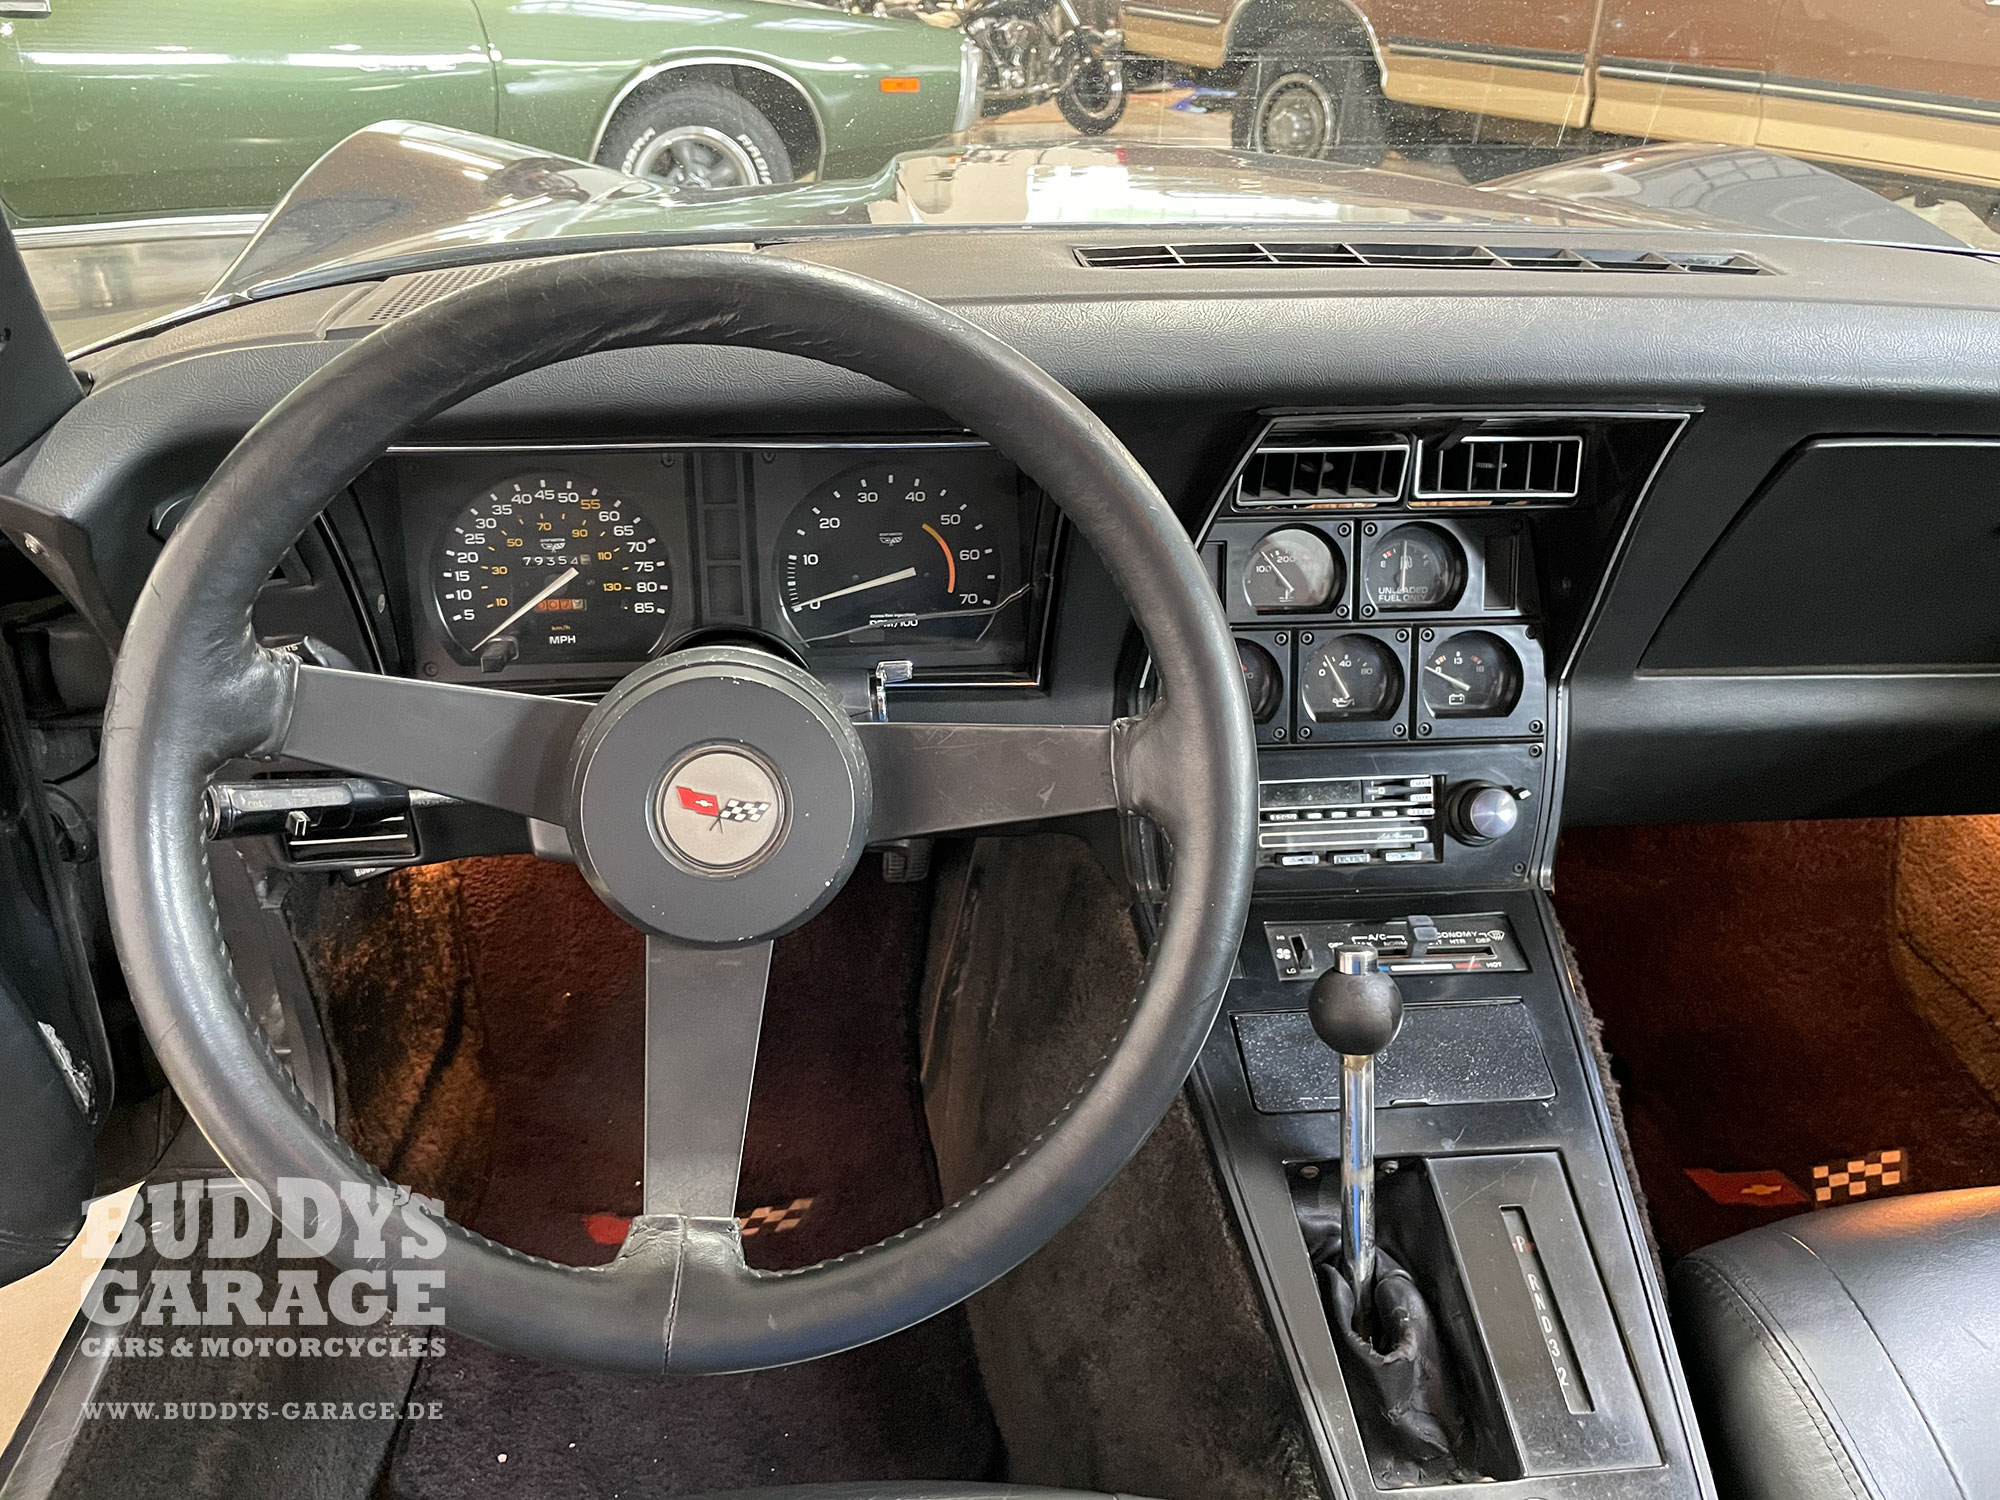 Corvette C3 Targa 1982 | Buddy's Garage Bad Oeynhausen